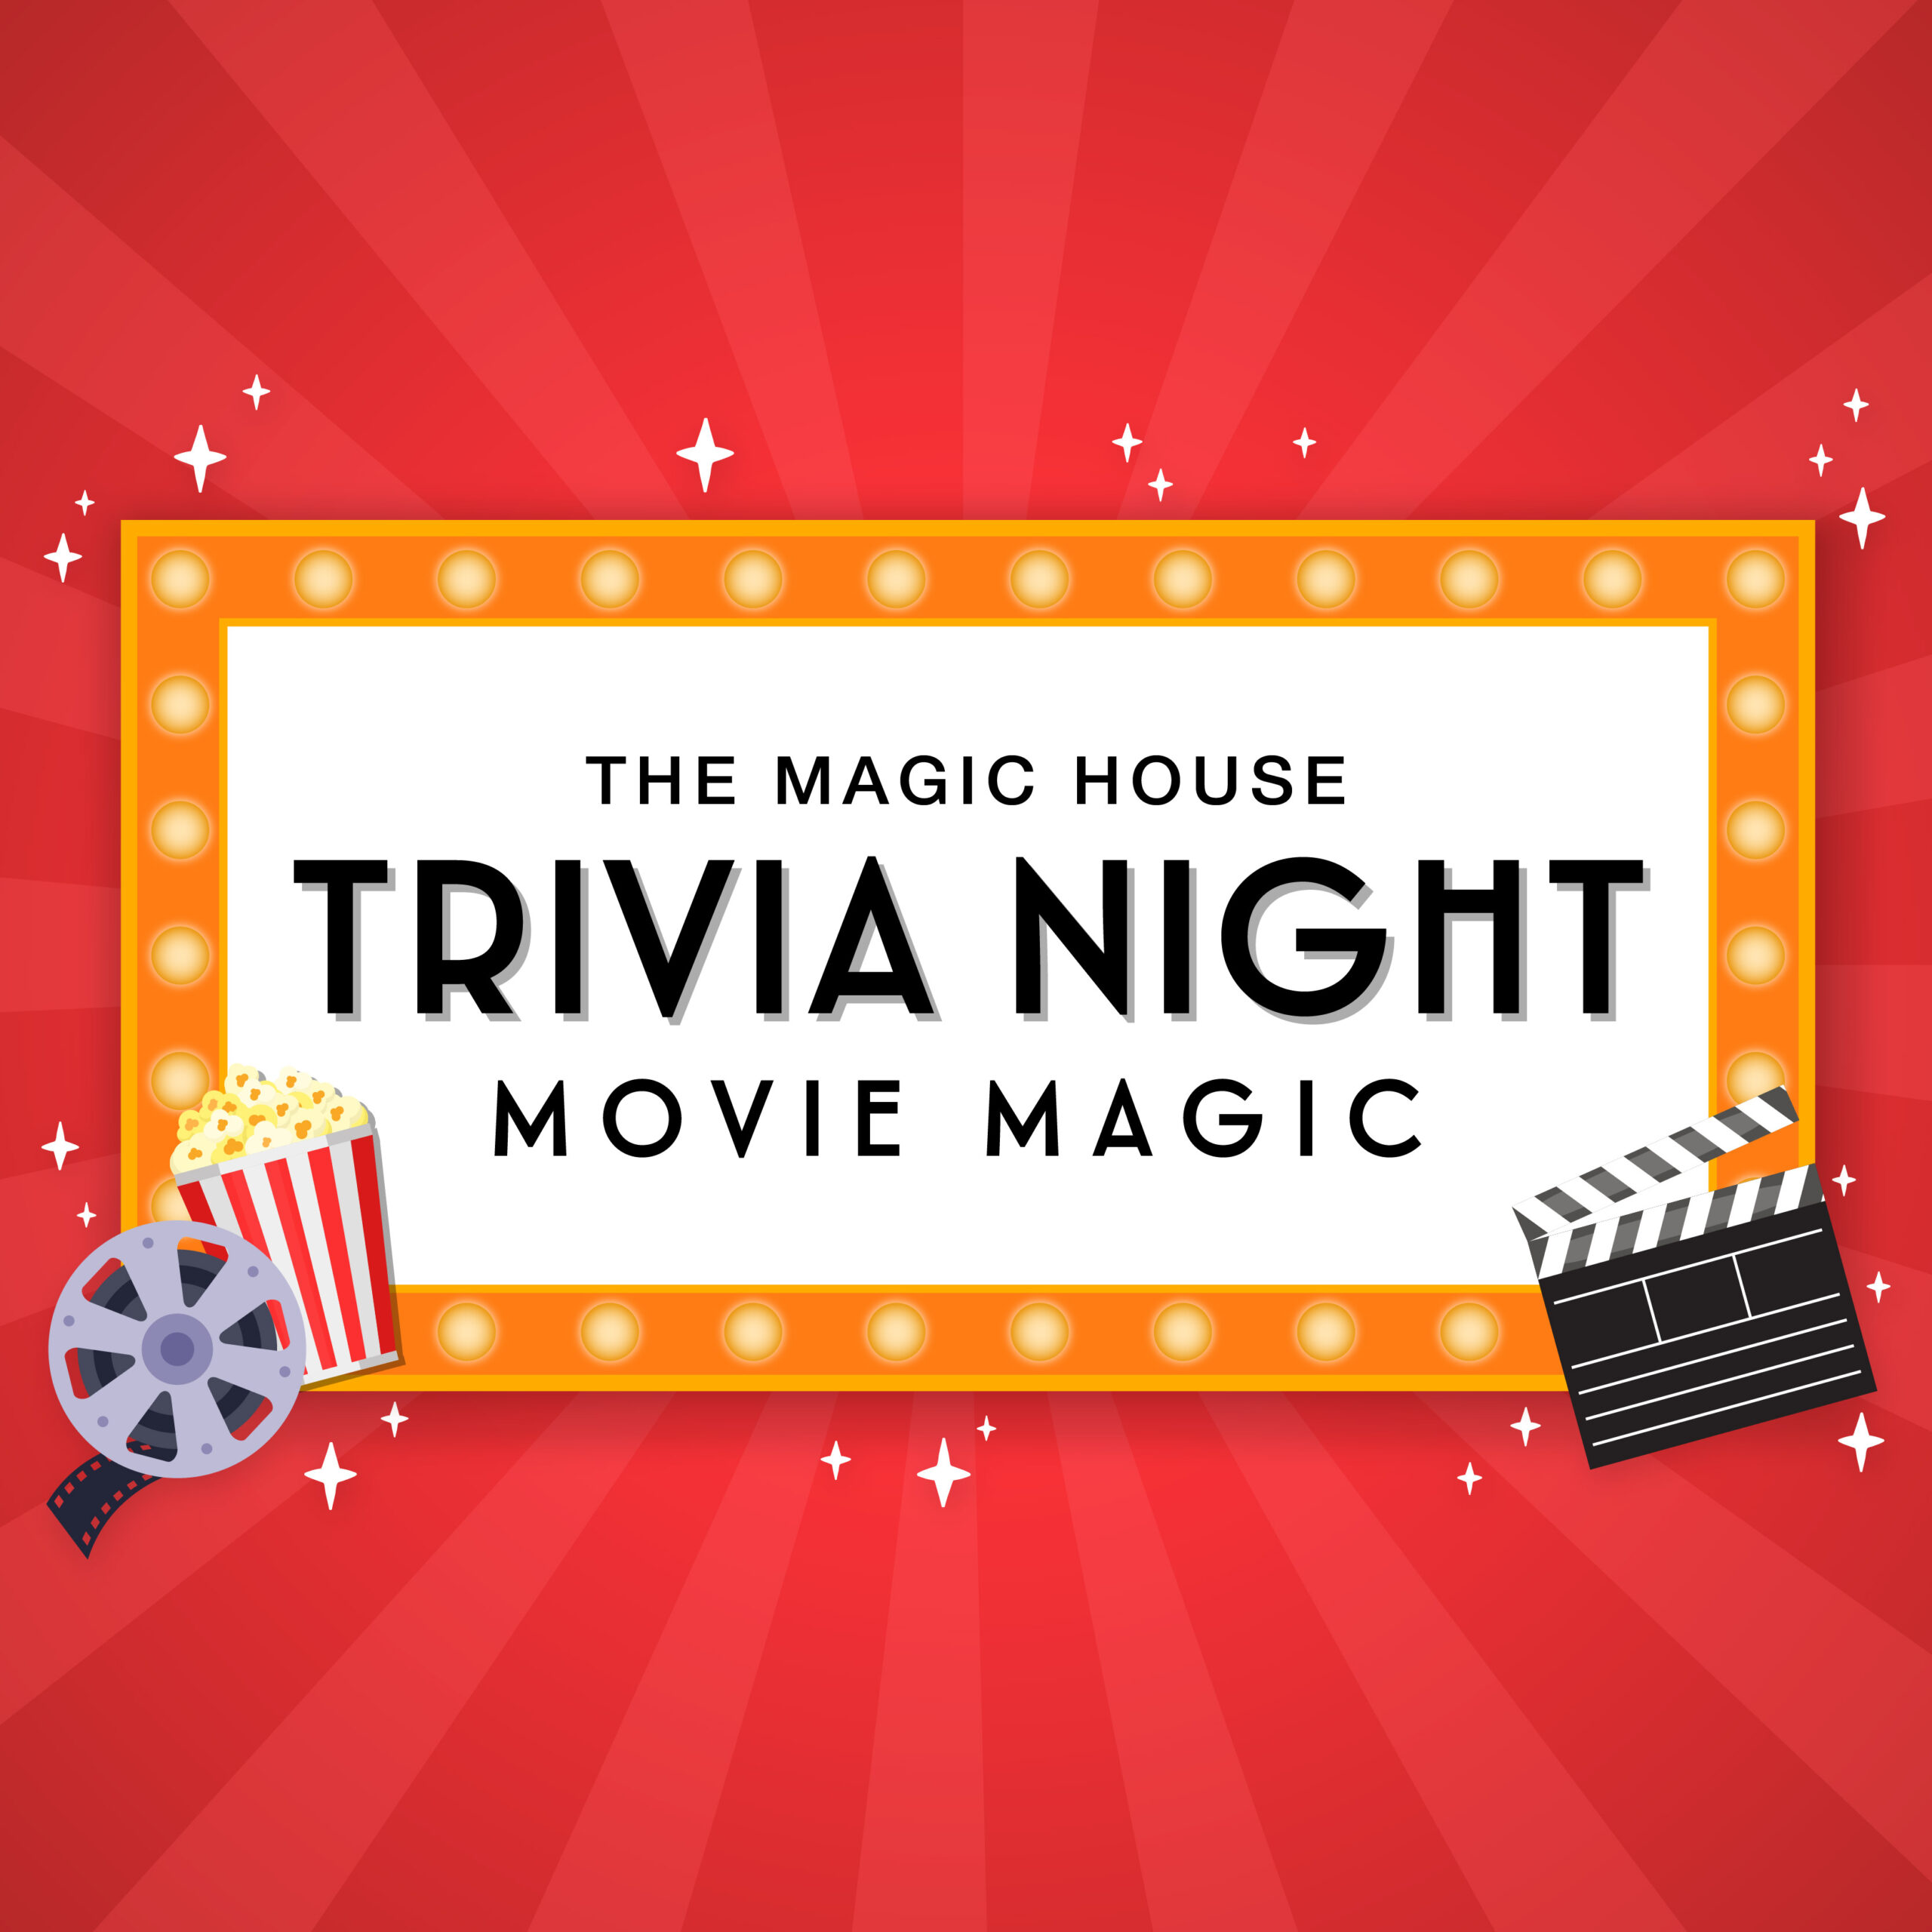 The Magic House Trivia Night: Movie Magic